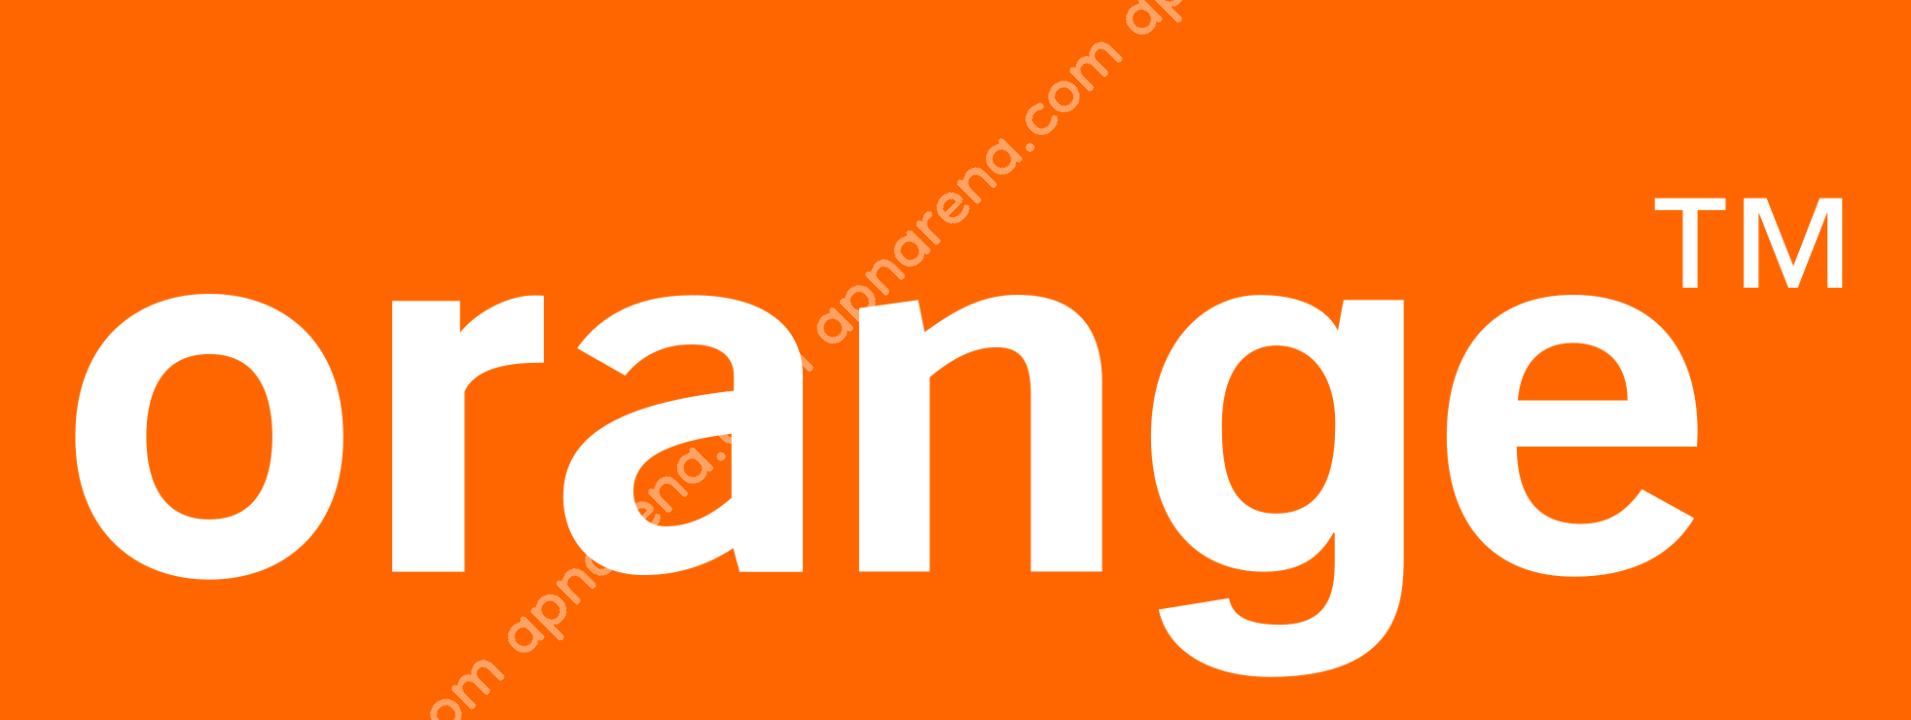 Orange Madagascar APN Internet Settings Android iPhone